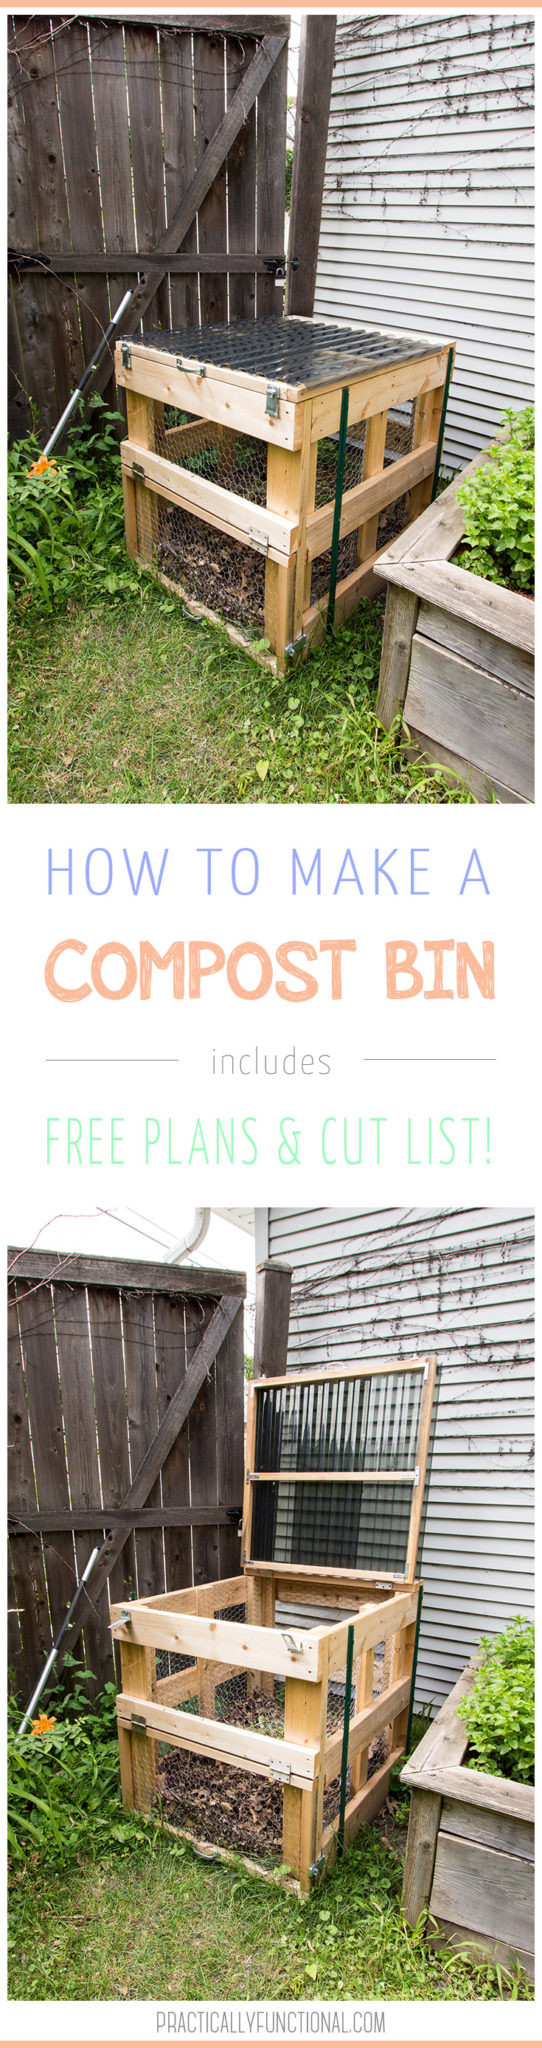 DIY Compost Bins Plans
 How To Build A DIY post Bin Free Plans & Cut List